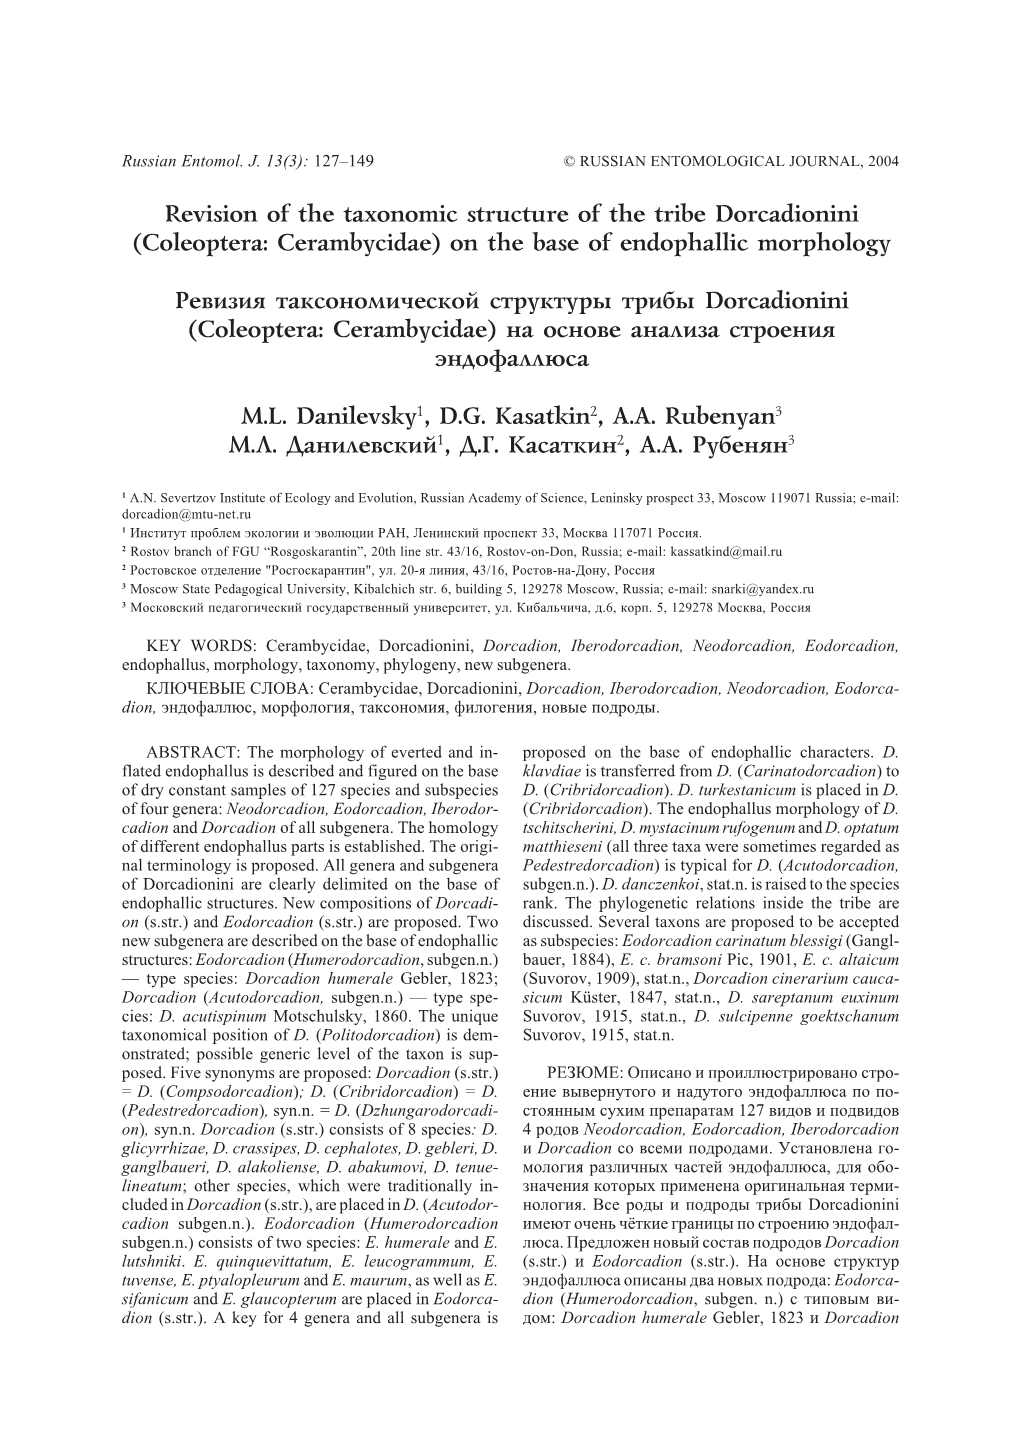 Revision of the Taxonomic Structure of the Tribe Dorcadionini (Coleoptera: Cerambycidae) on the Base of Endophallic Morphology